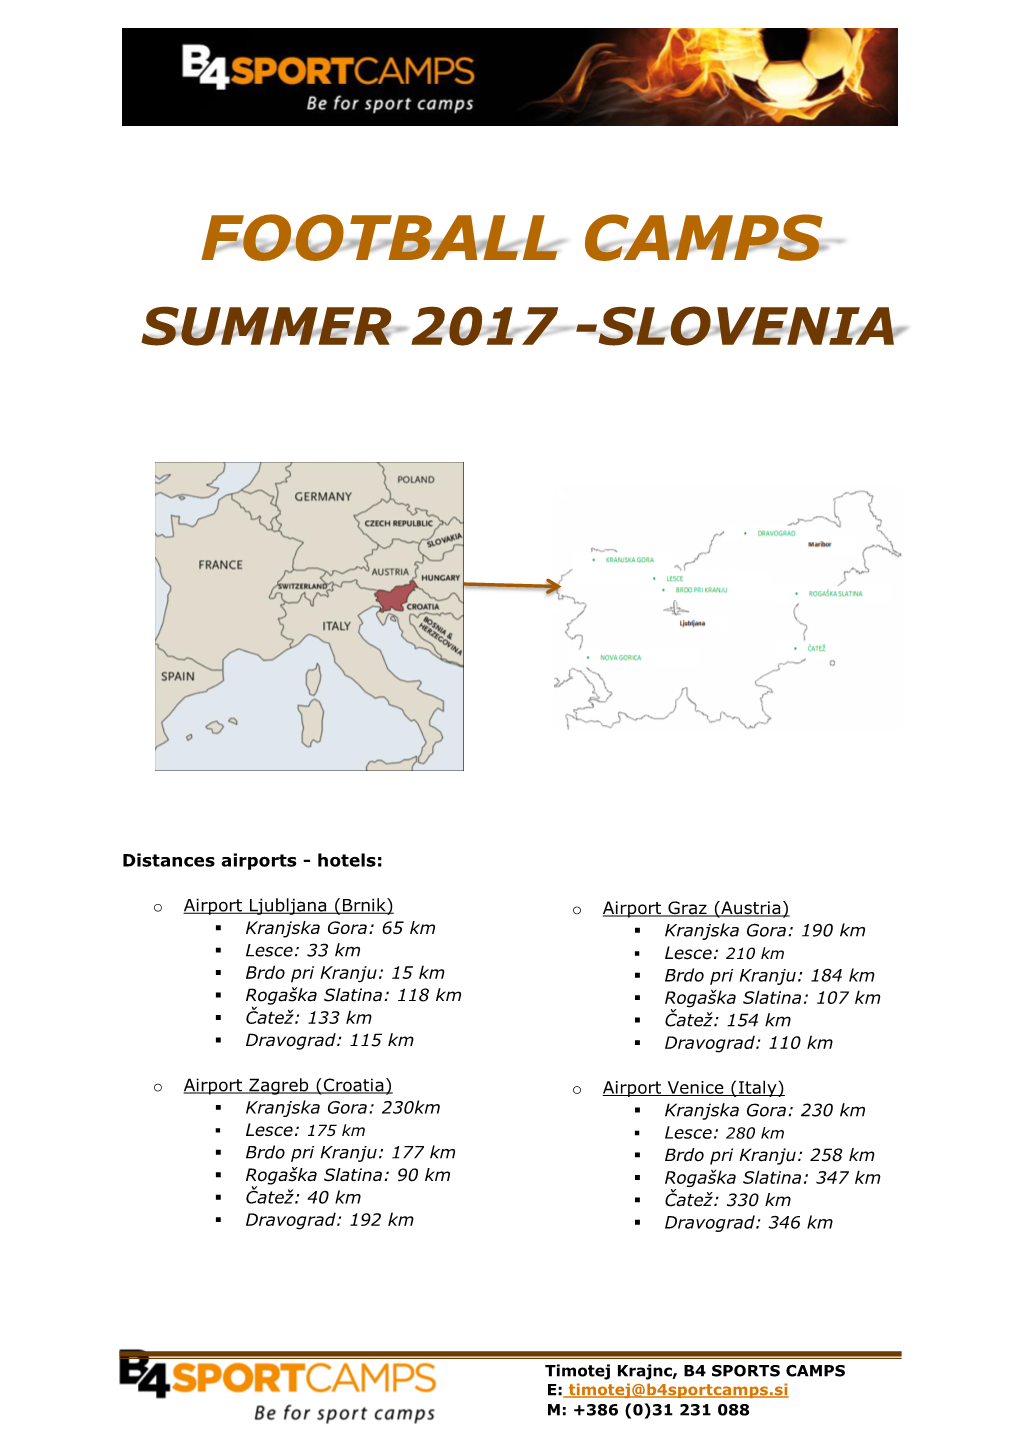 Football Camps Summer 2017 -Slovenia